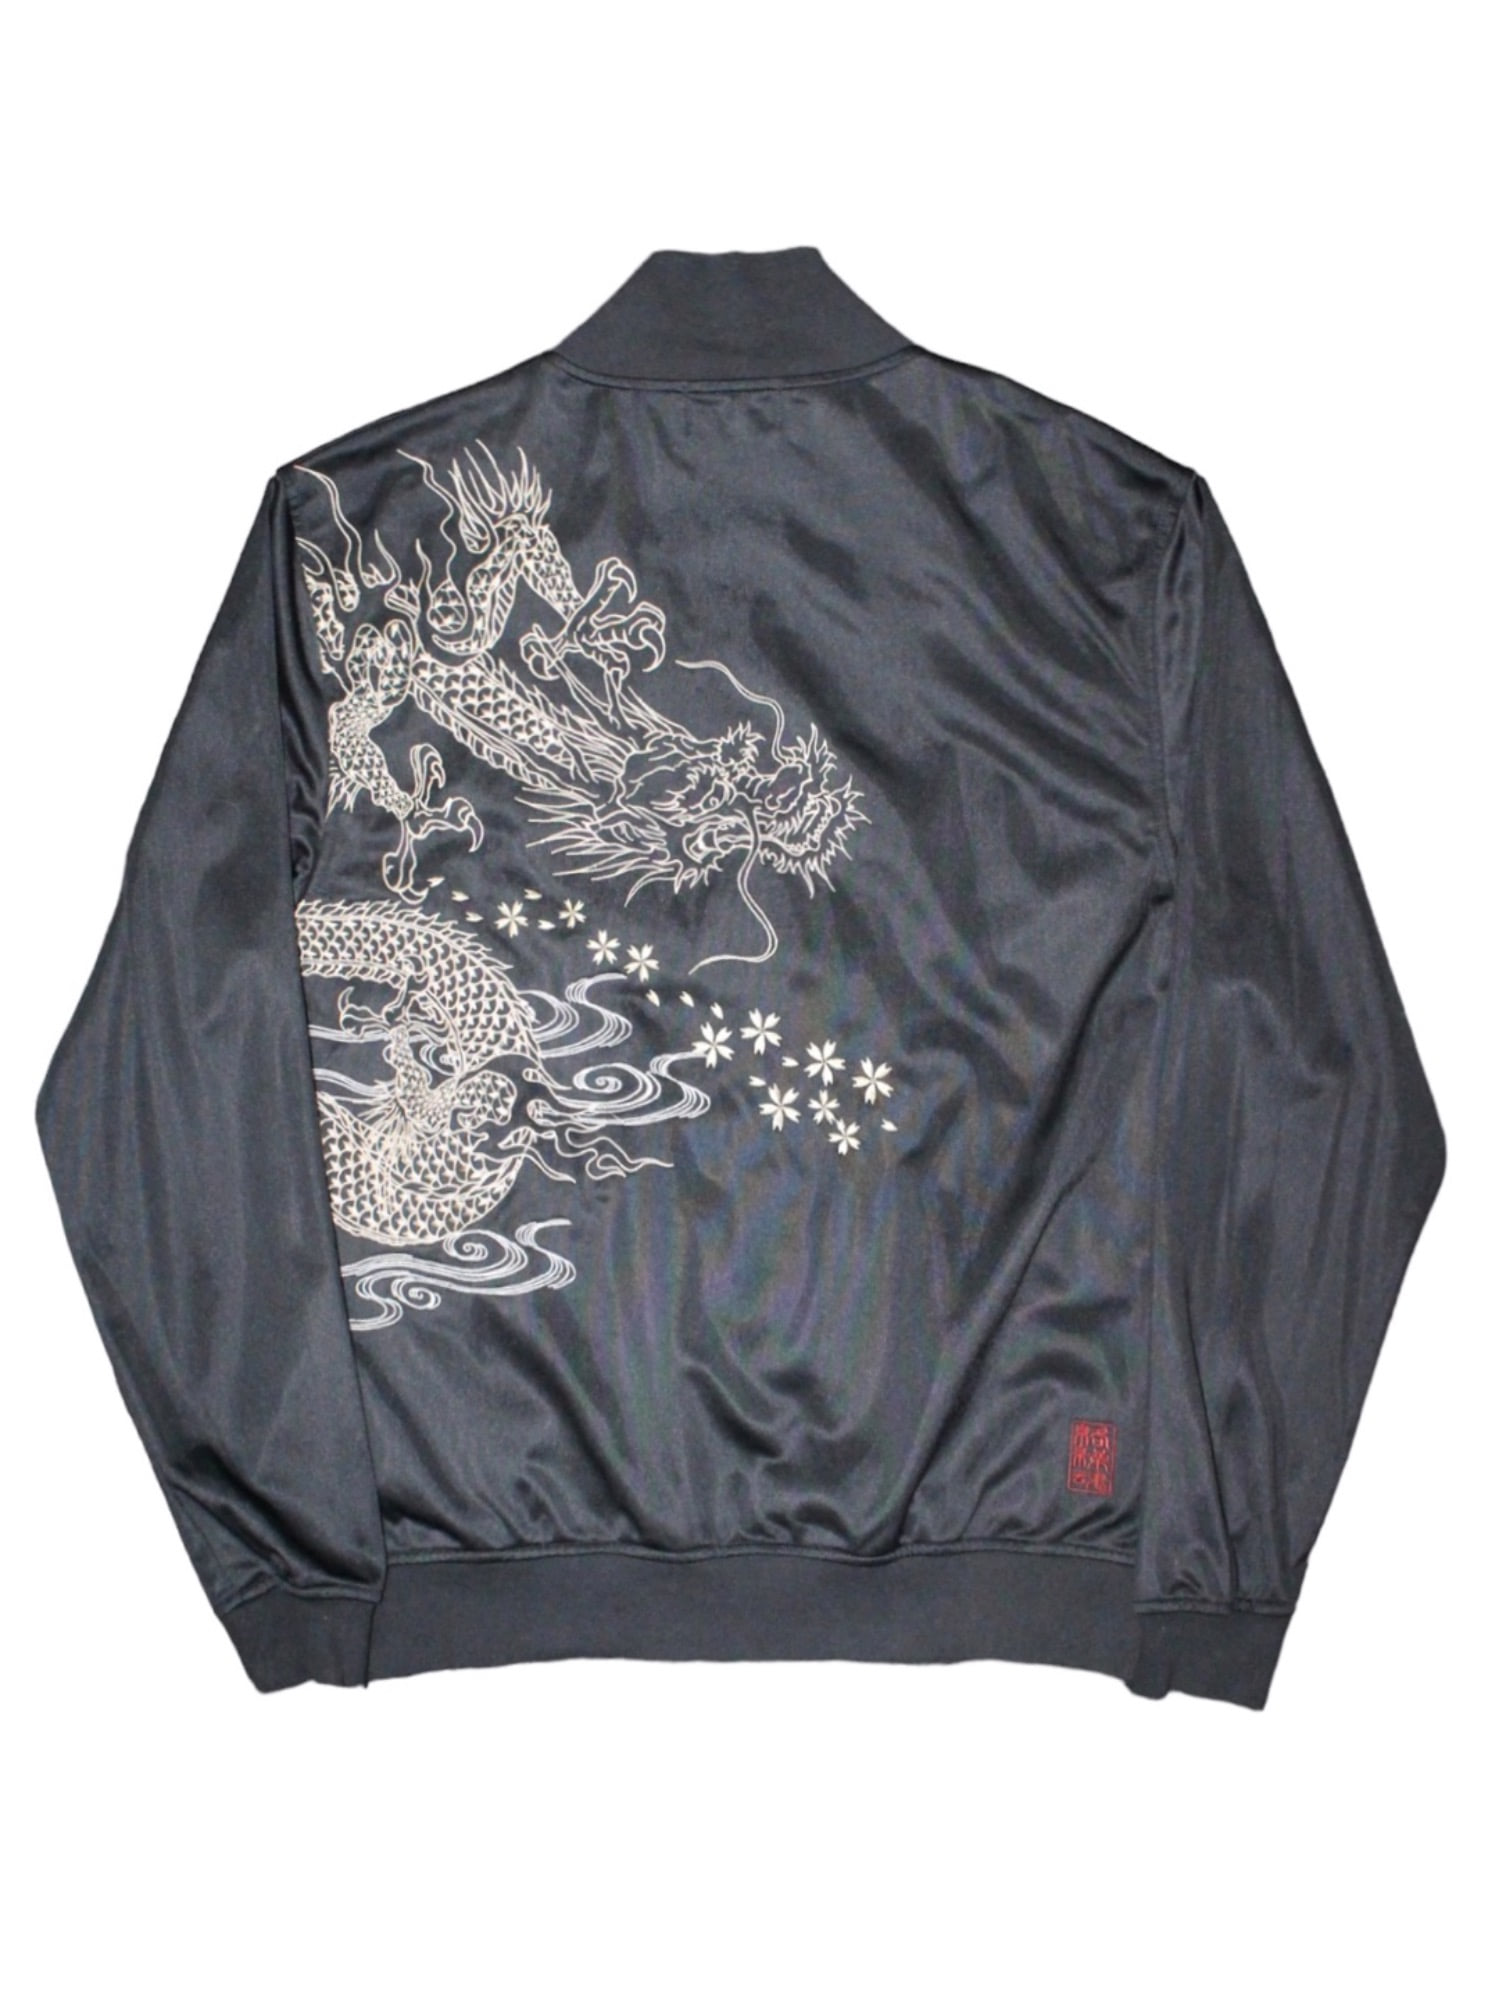 KARAKURI TAMASHII 絡繰魂 Orienatal Dragon Embroidery Jersey - XL